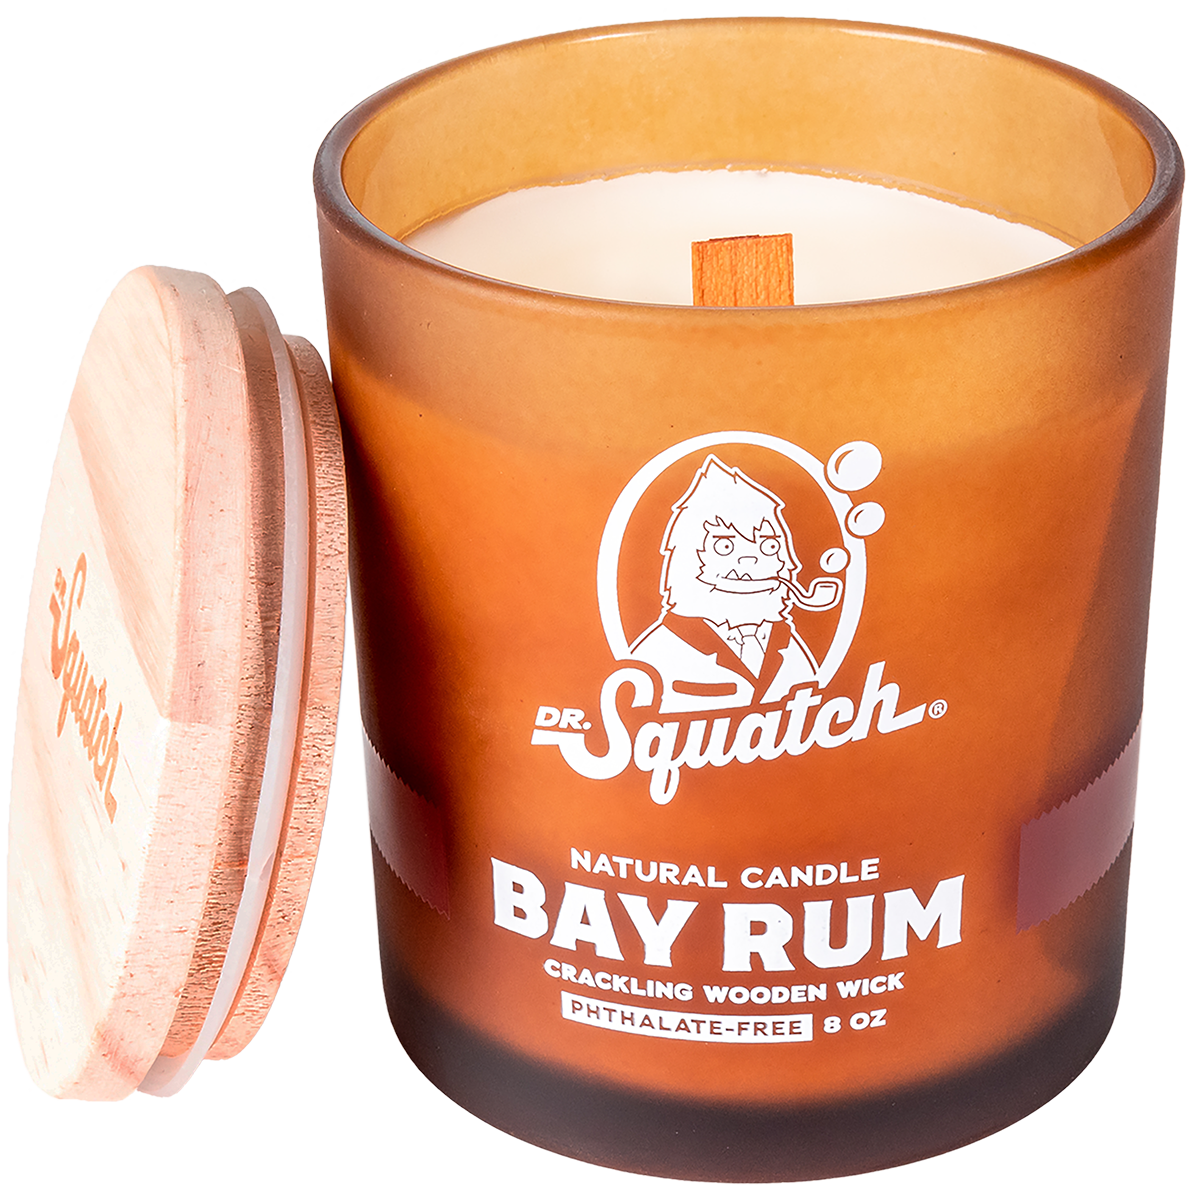 Dr. Squatch Natural Bar Soap, Bay Rum, 5 oz